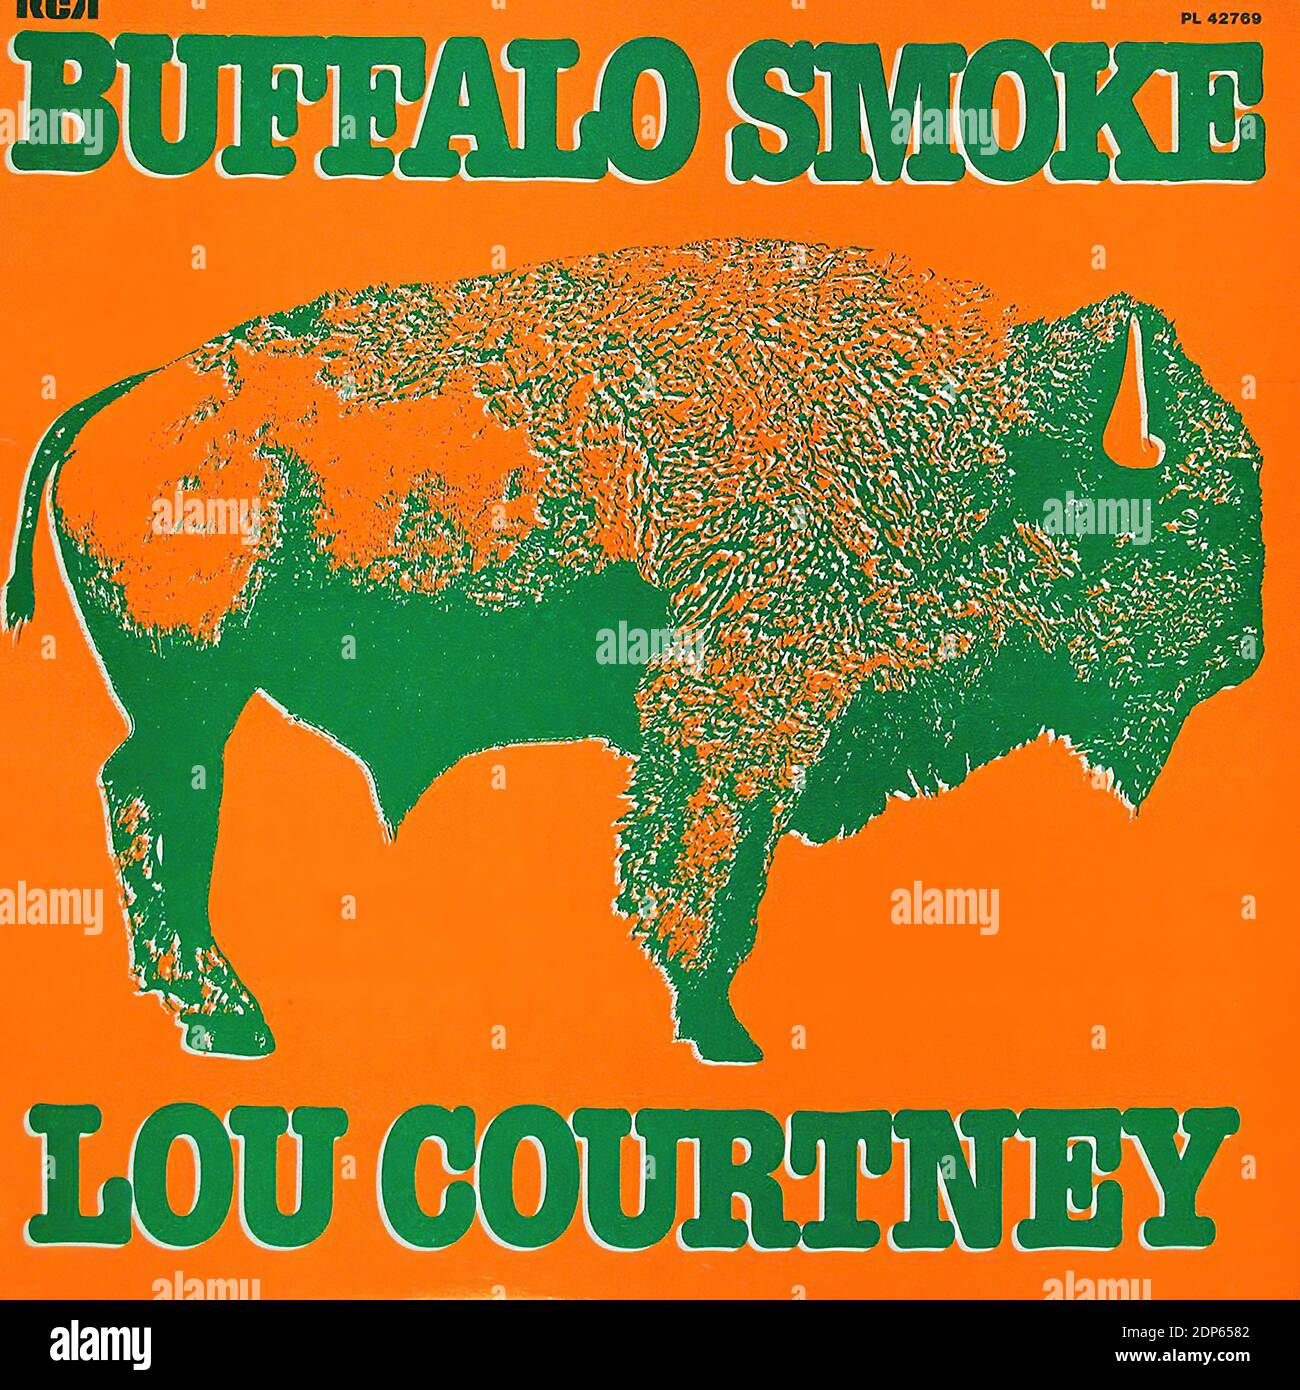 LOU COURTNEY BUFFALO SMOKE NORTHERN SOUL 12  LP  - Vintage Vinyl Record Cover Stock Photo